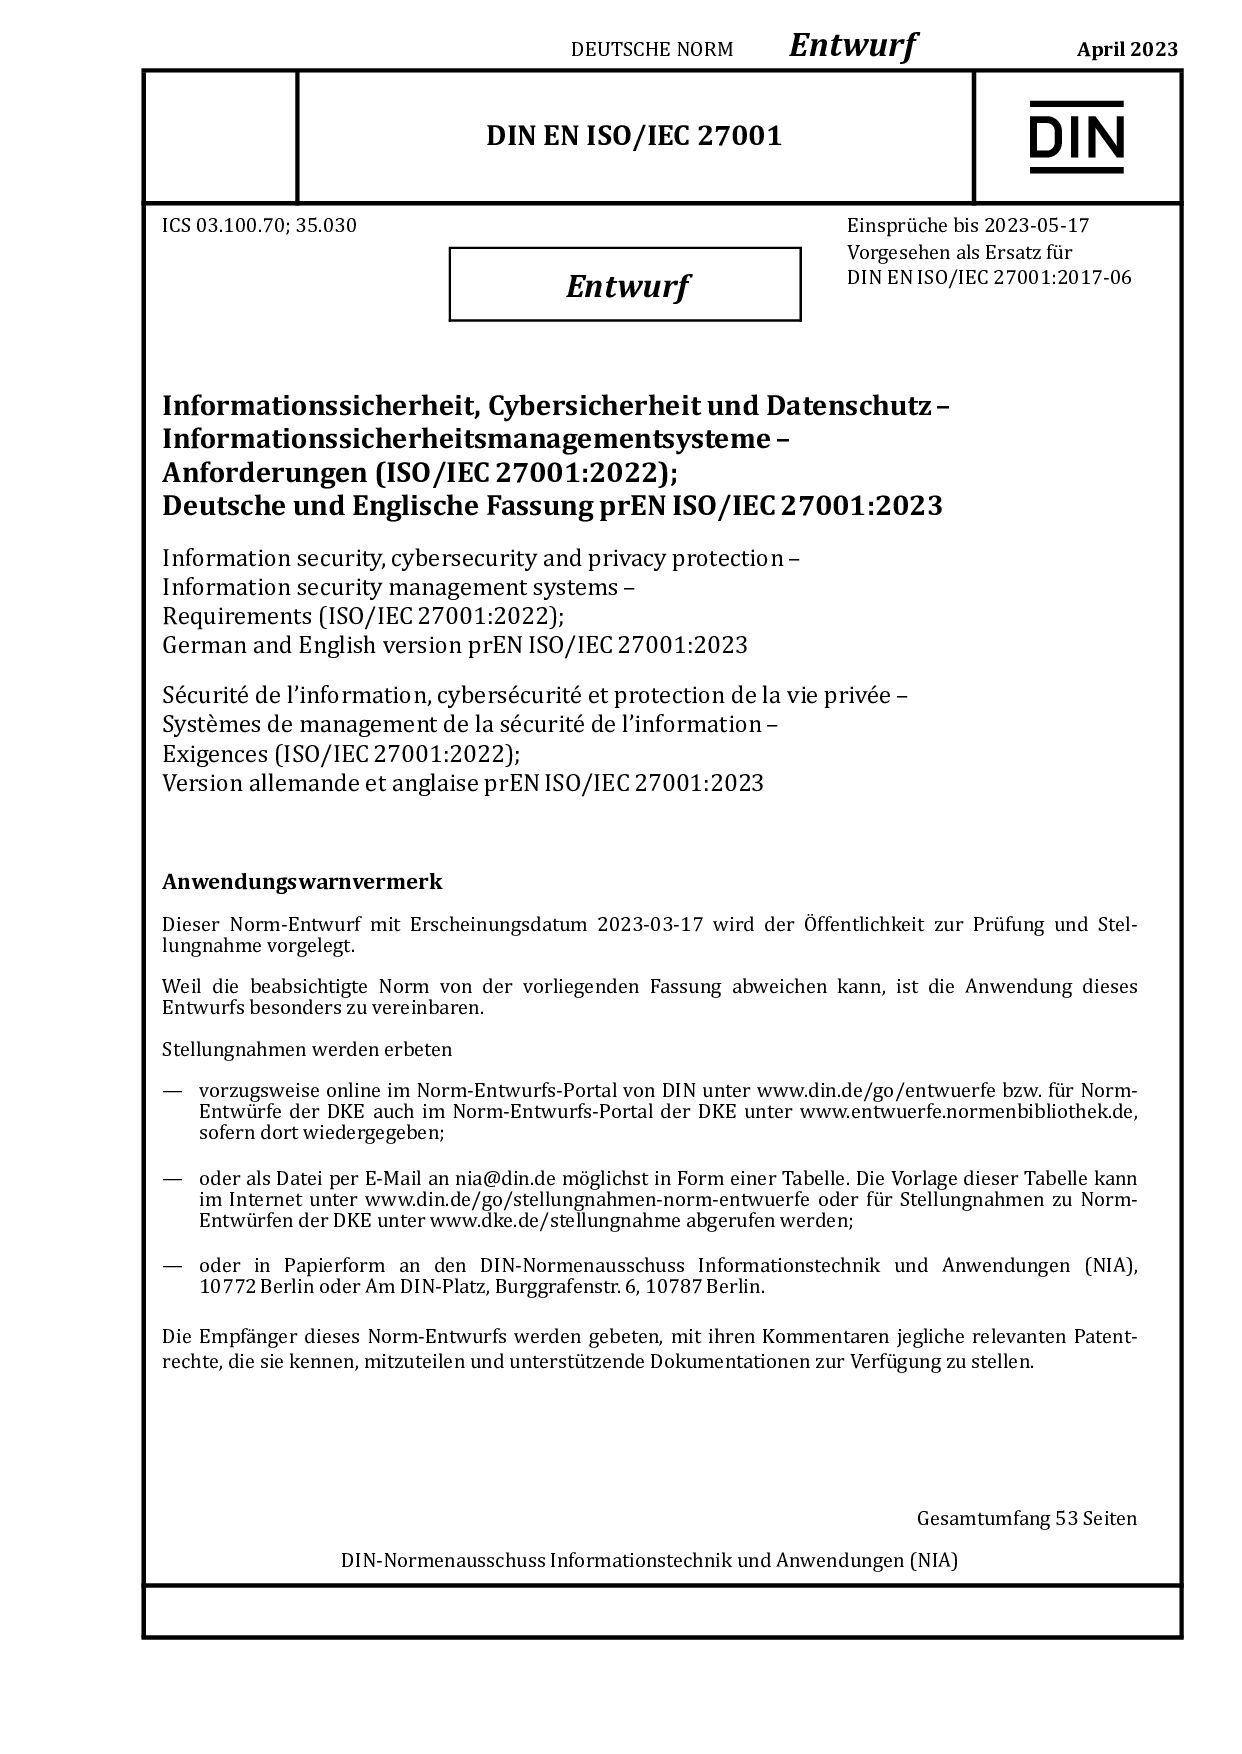 DIN EN ISO/IEC 27001:2023封面图